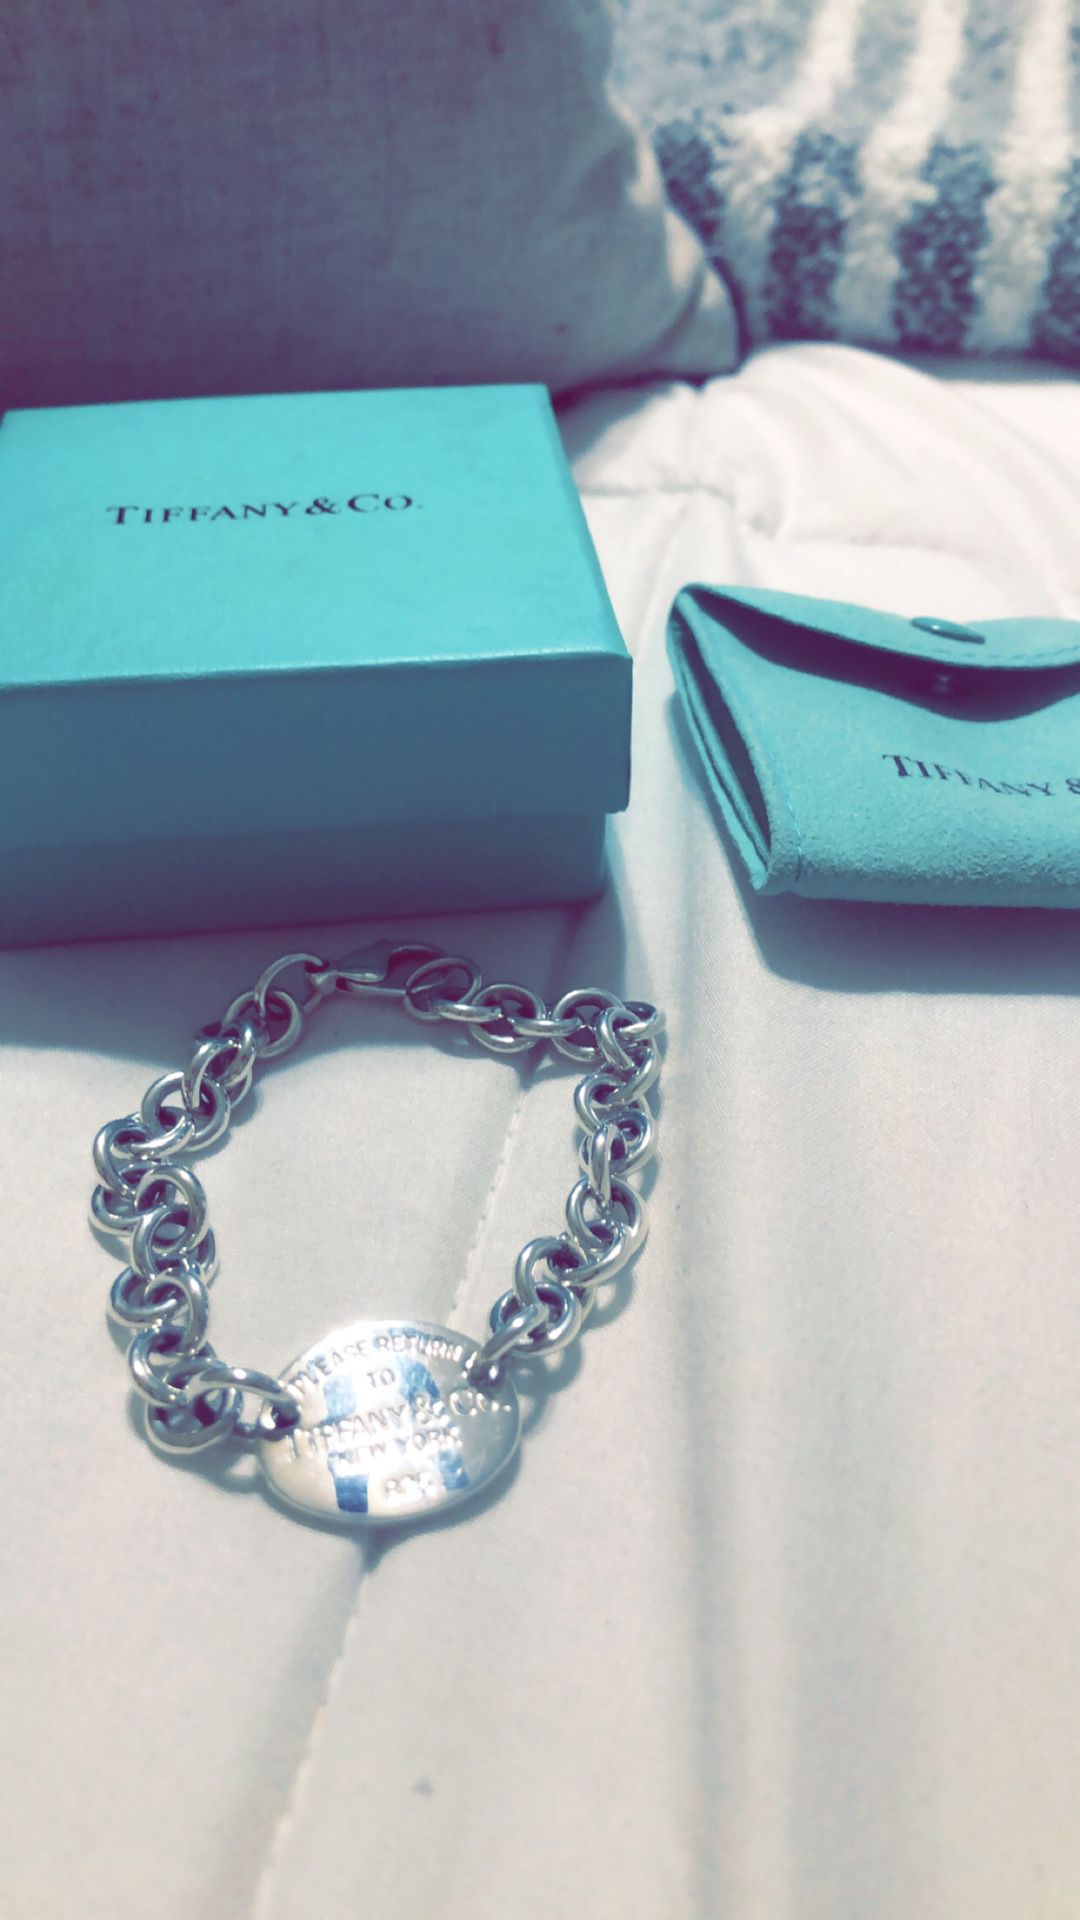 TIFFANY return to link bracelet like new